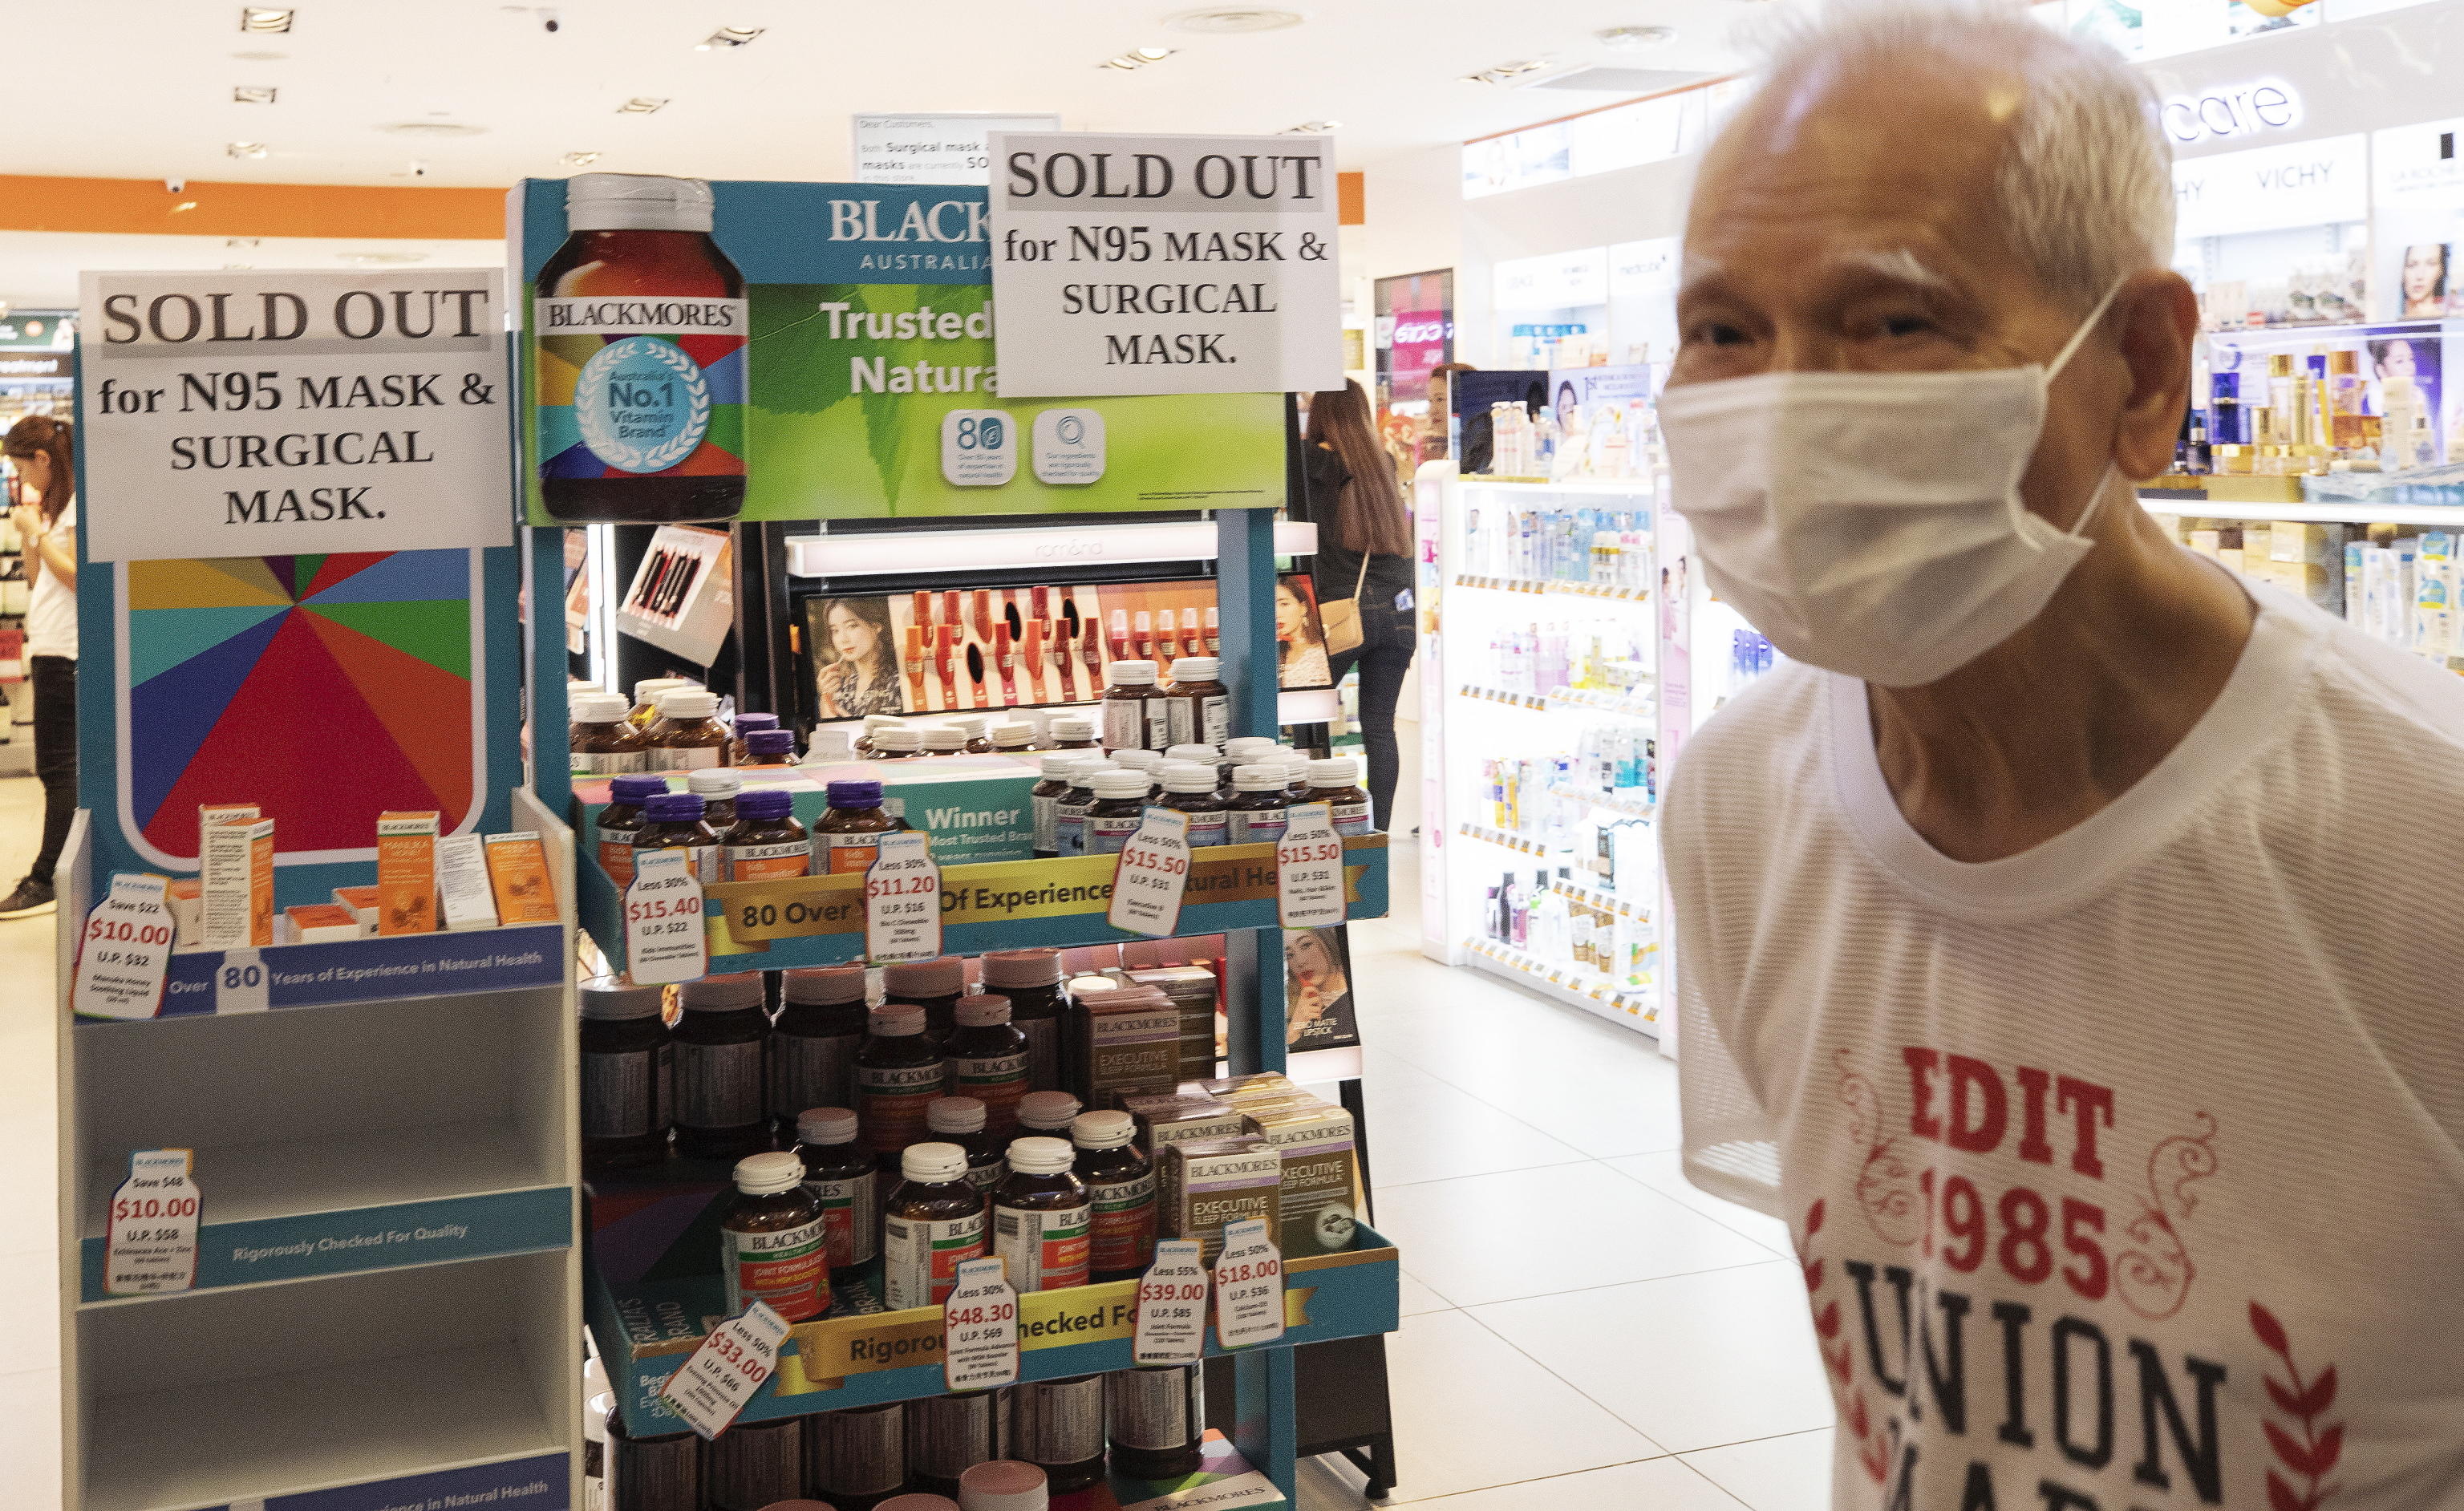 Cinque i casi di Coronavirus registrati finora a Singapore